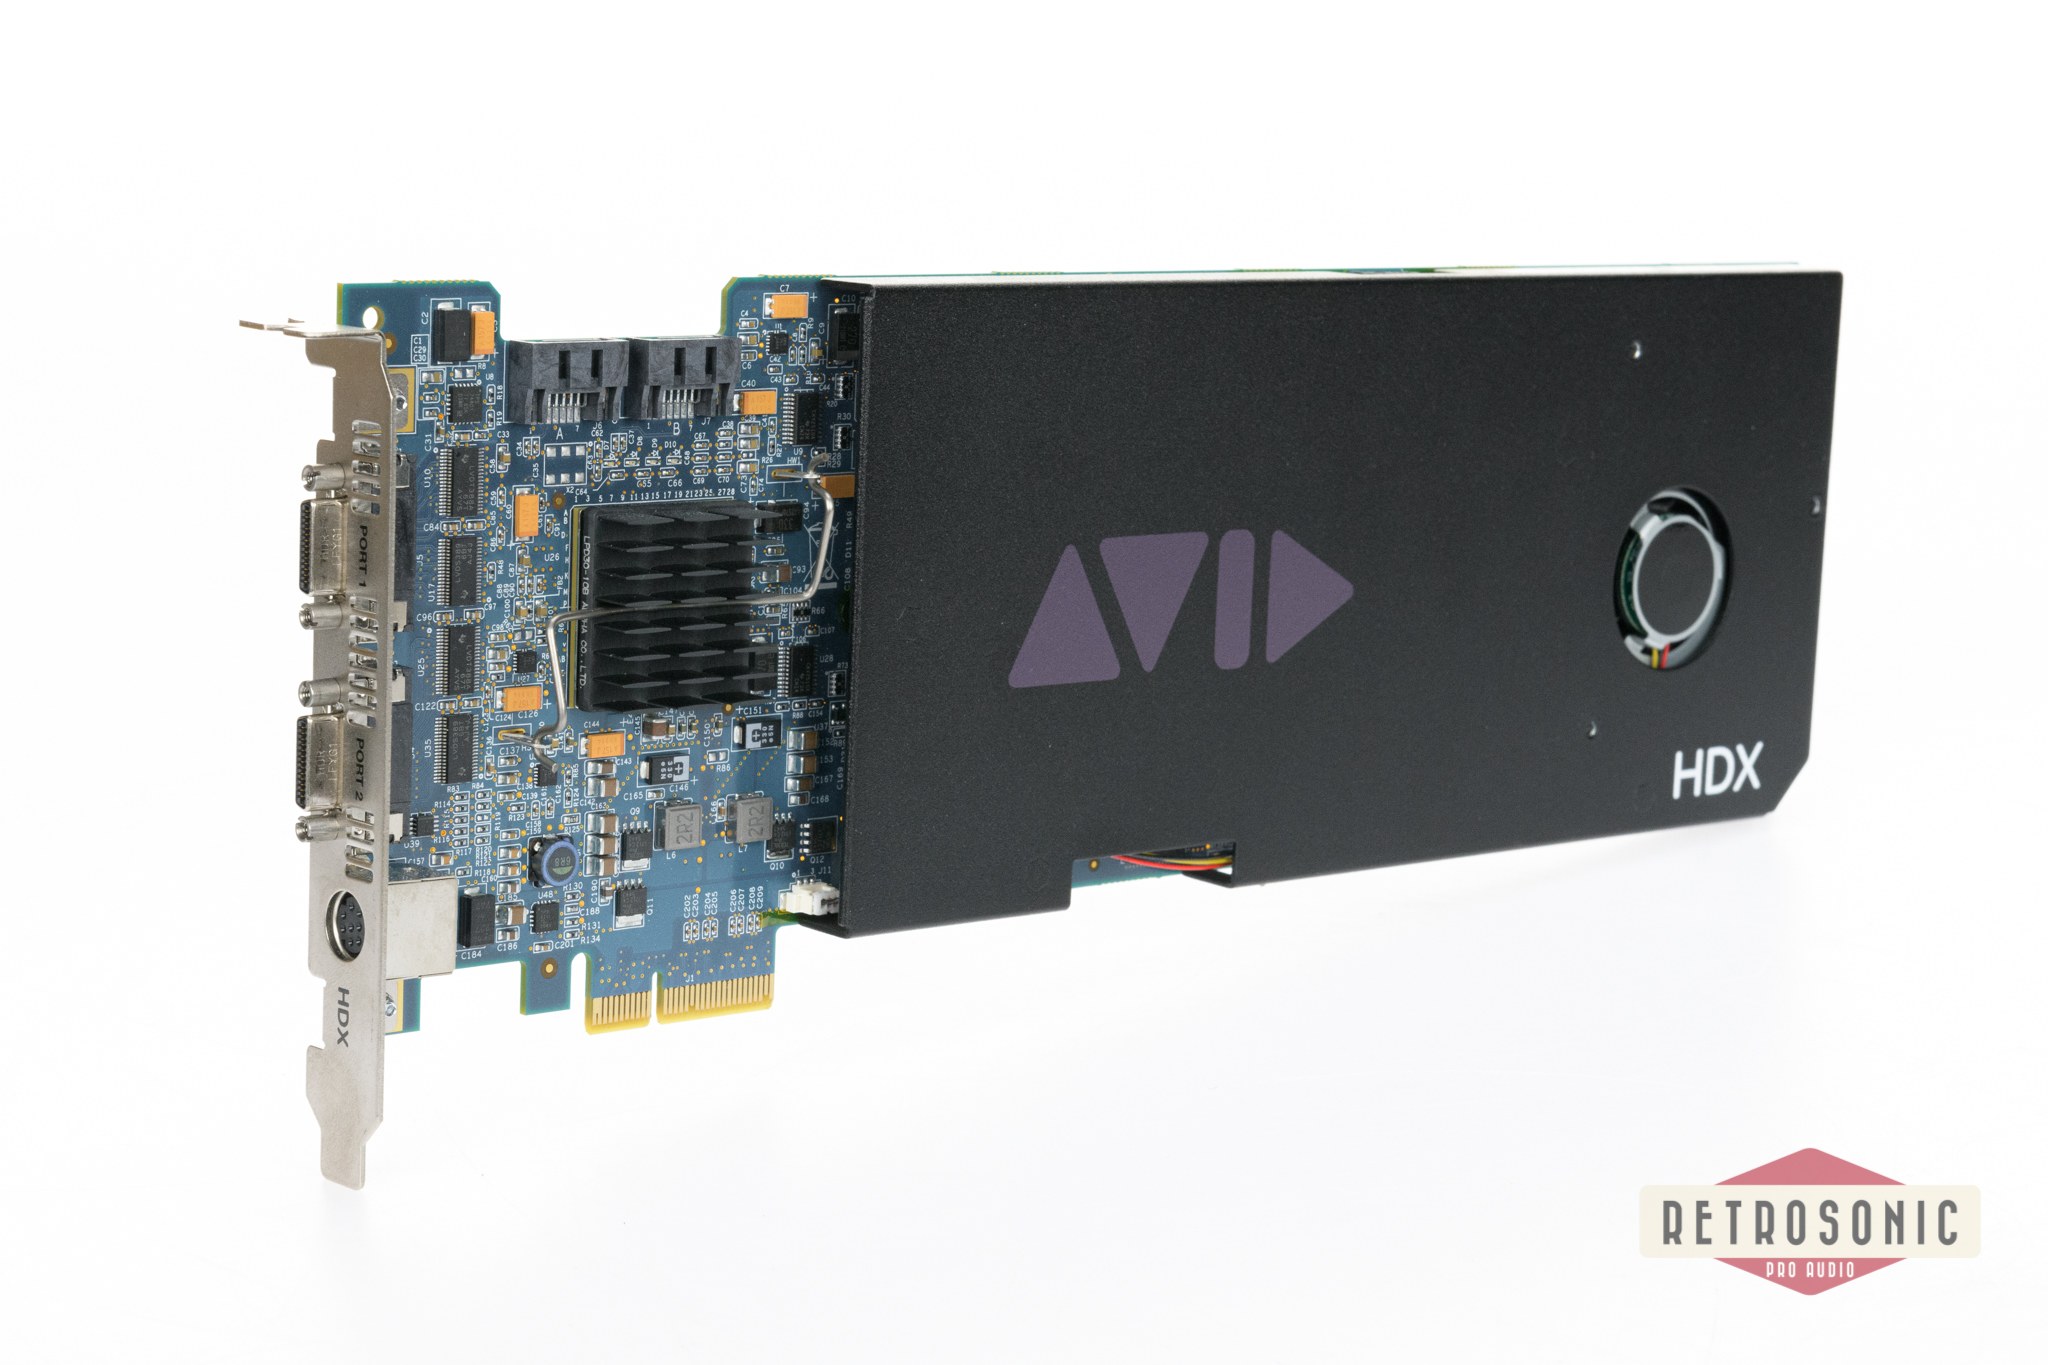 Avid HDX PCIe card #1